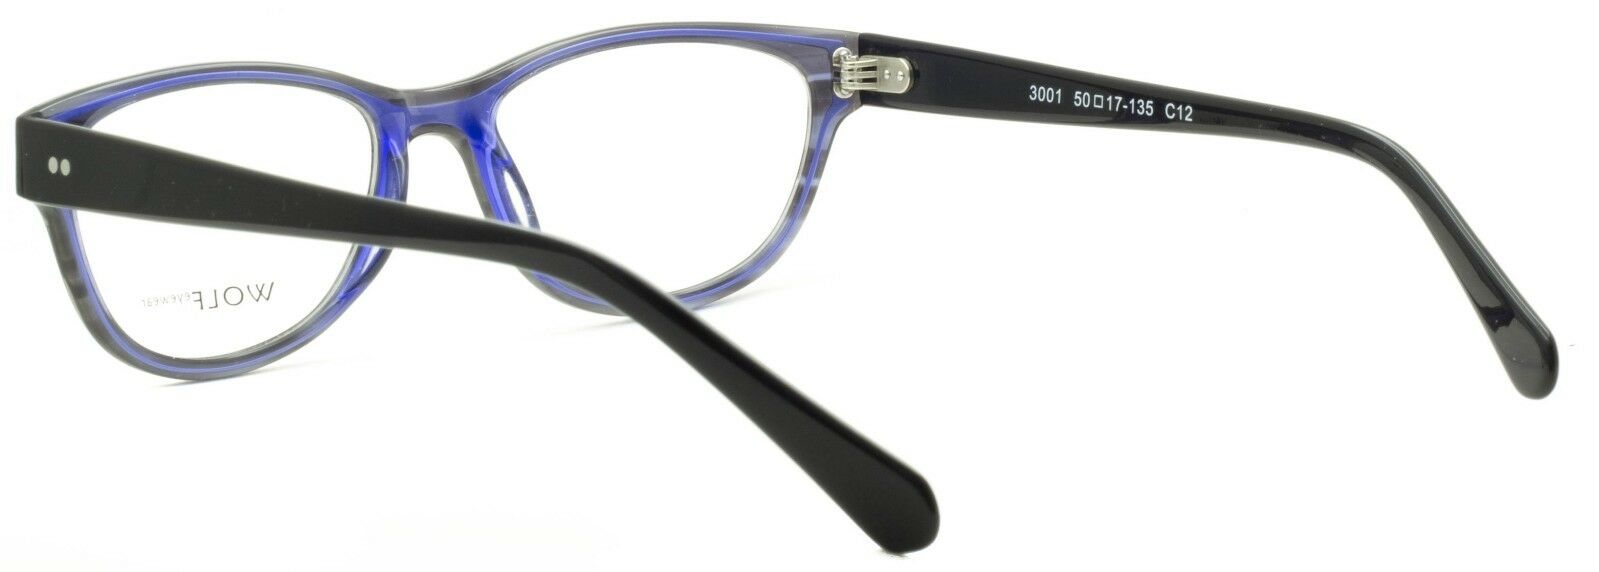 WOLF EYEWEAR 3001 C12 FRAMES RX Optical Glasses Eyeglasses Eyewear New -TRUSTED